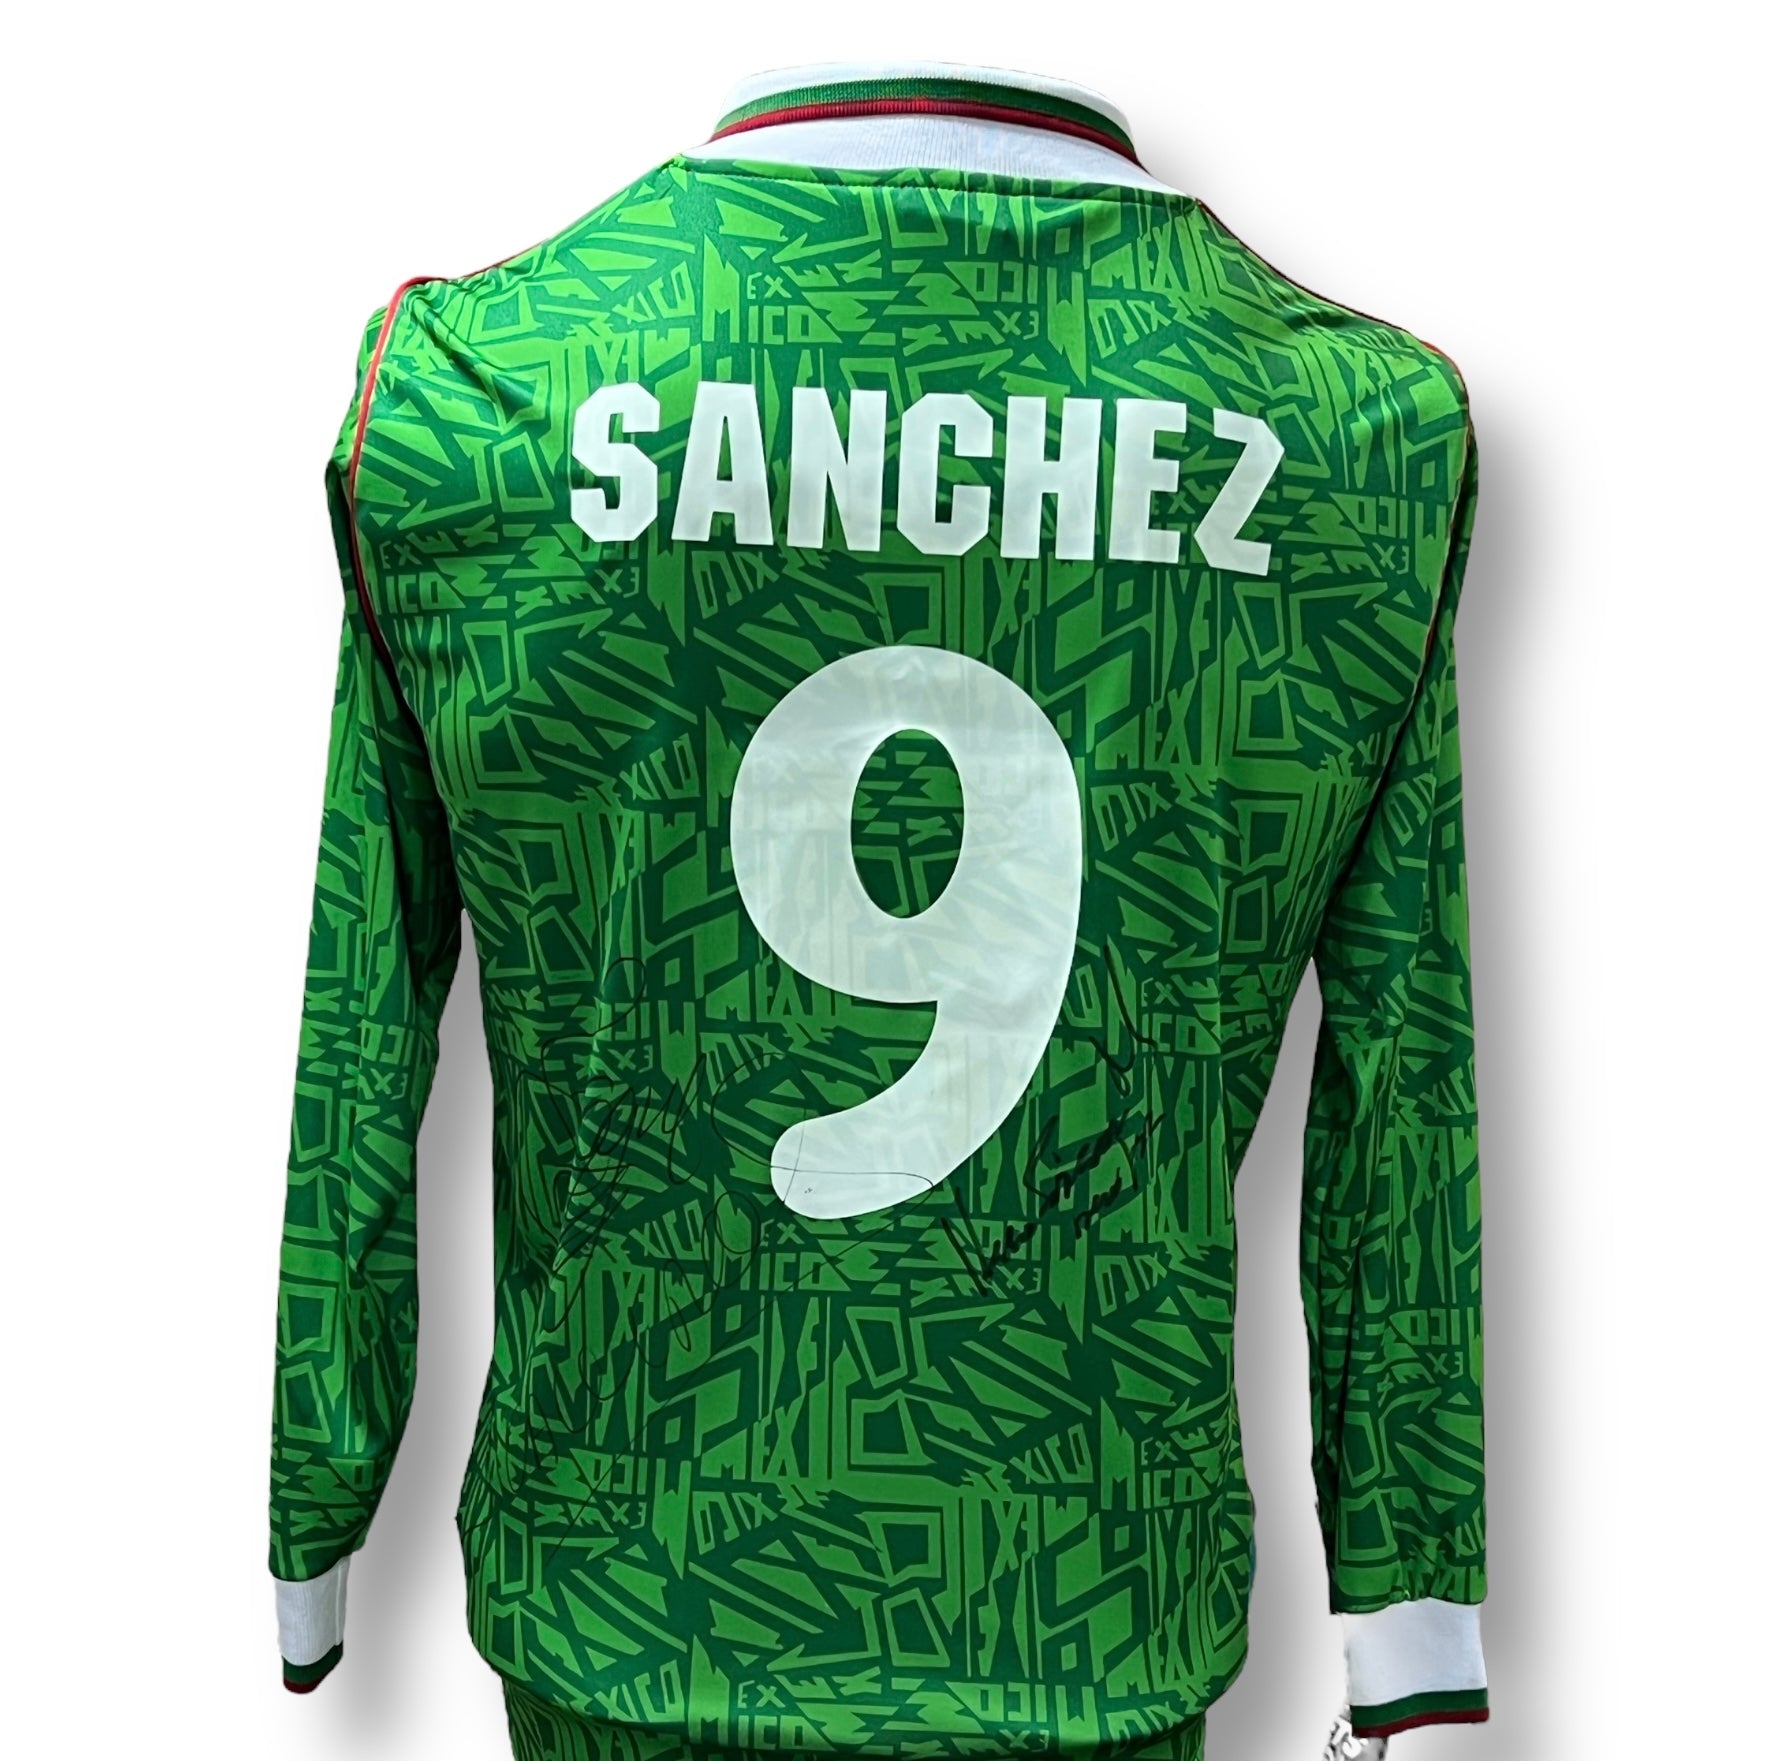 Hugo Sánchez Mexico jersey